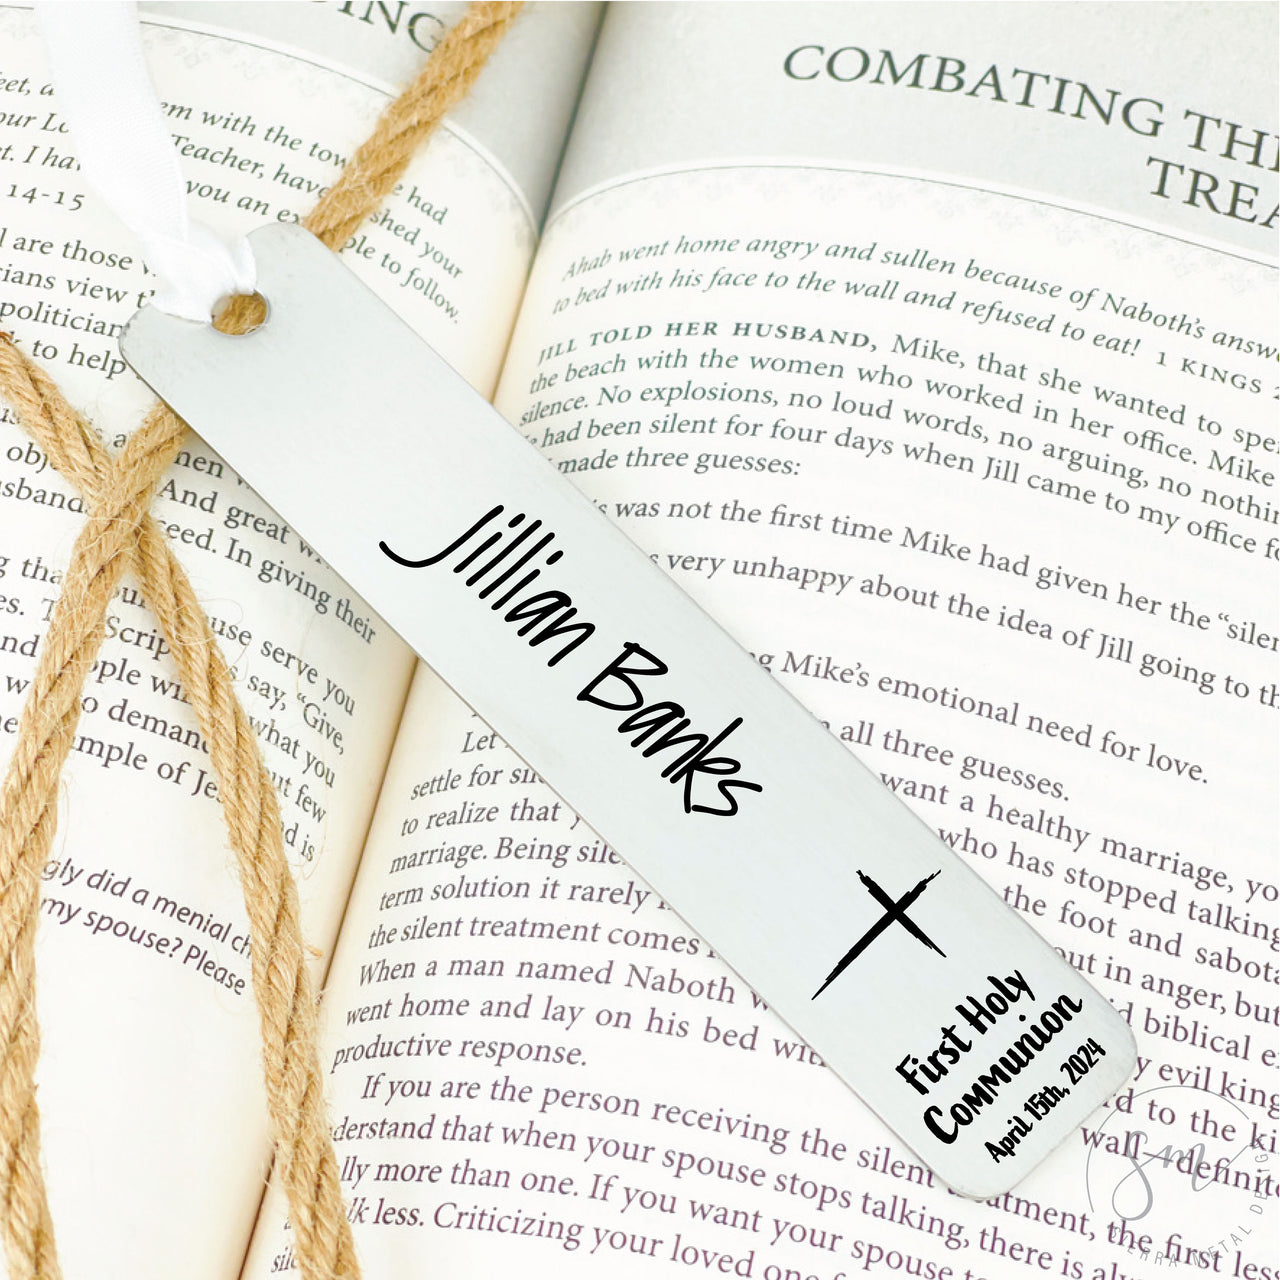 First Communion Bookmark